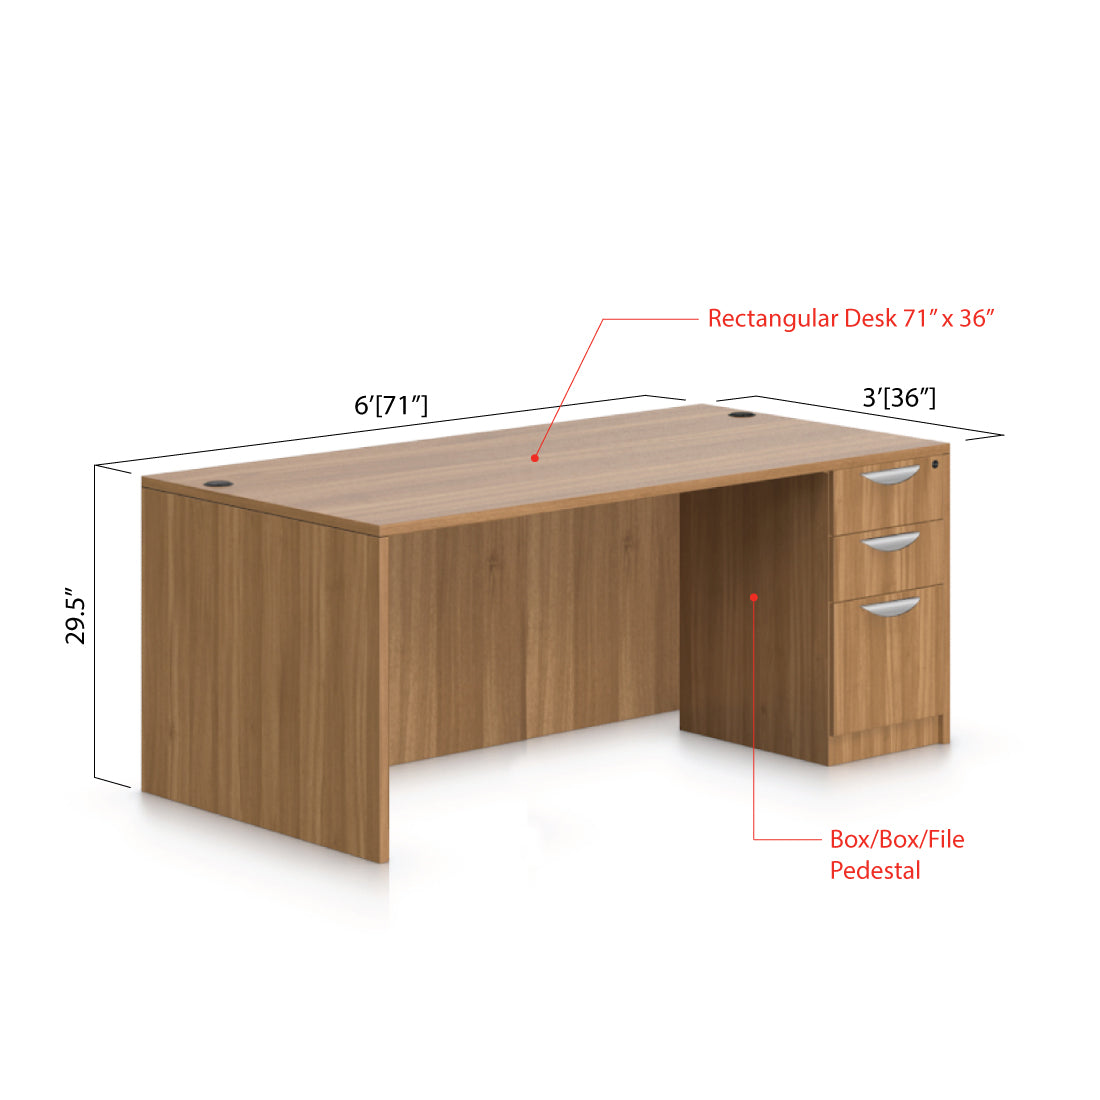 71"x36" Rectangular Desk with B/B/F pedestal - Kainosbuy.com